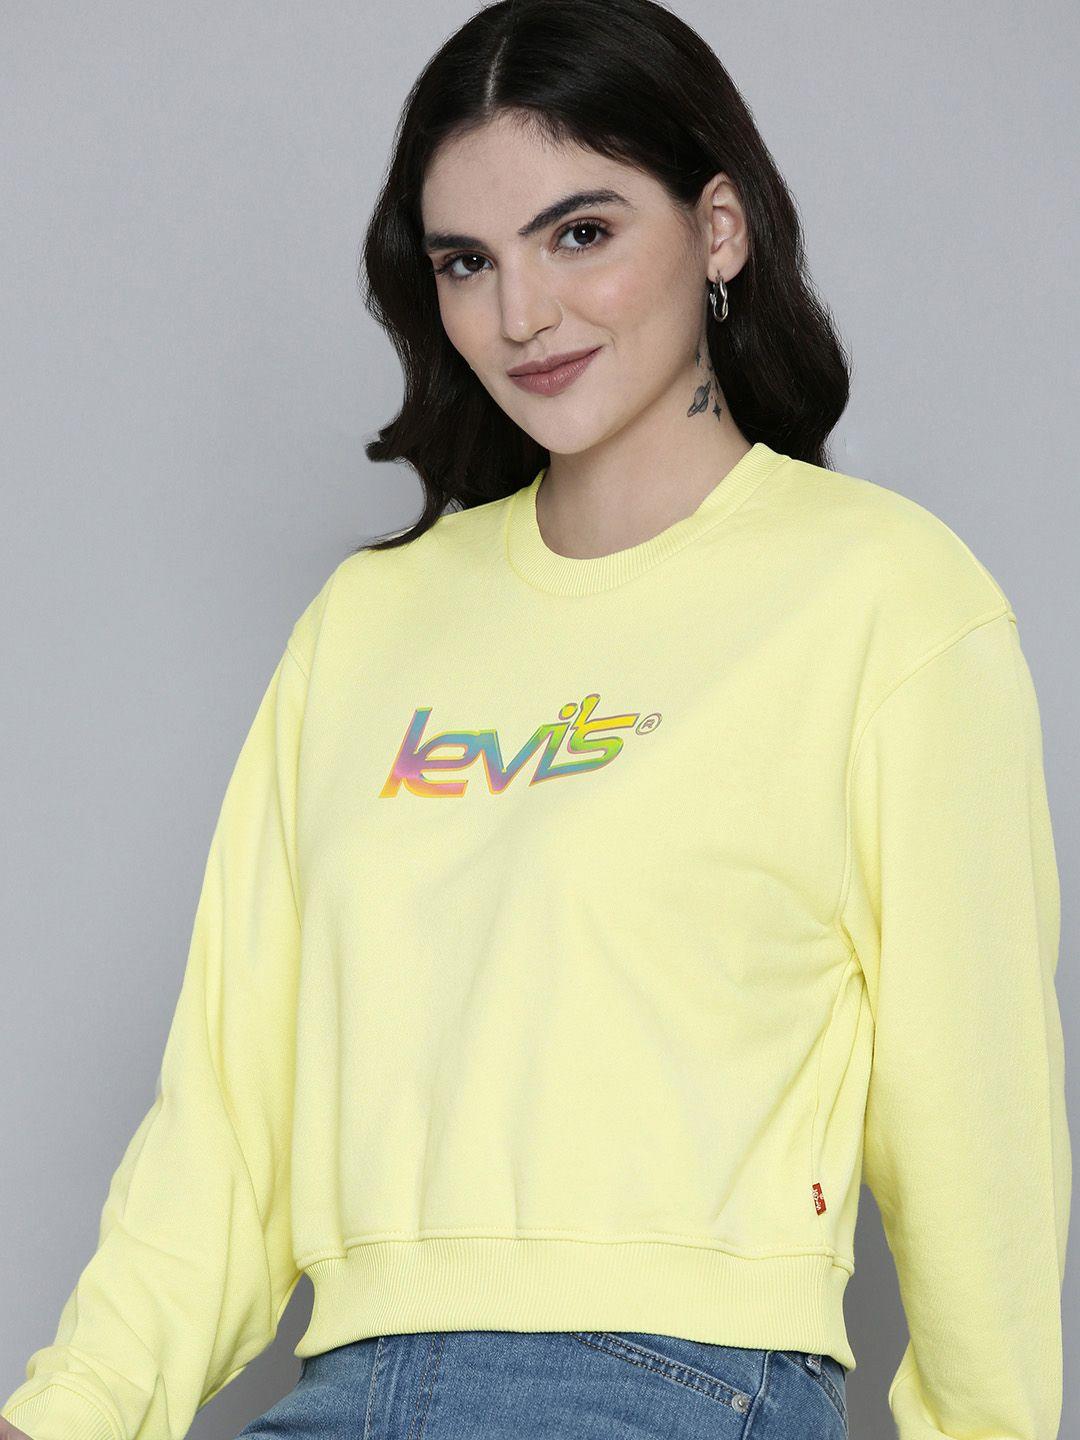 levis women brand logo printed sweatshirt